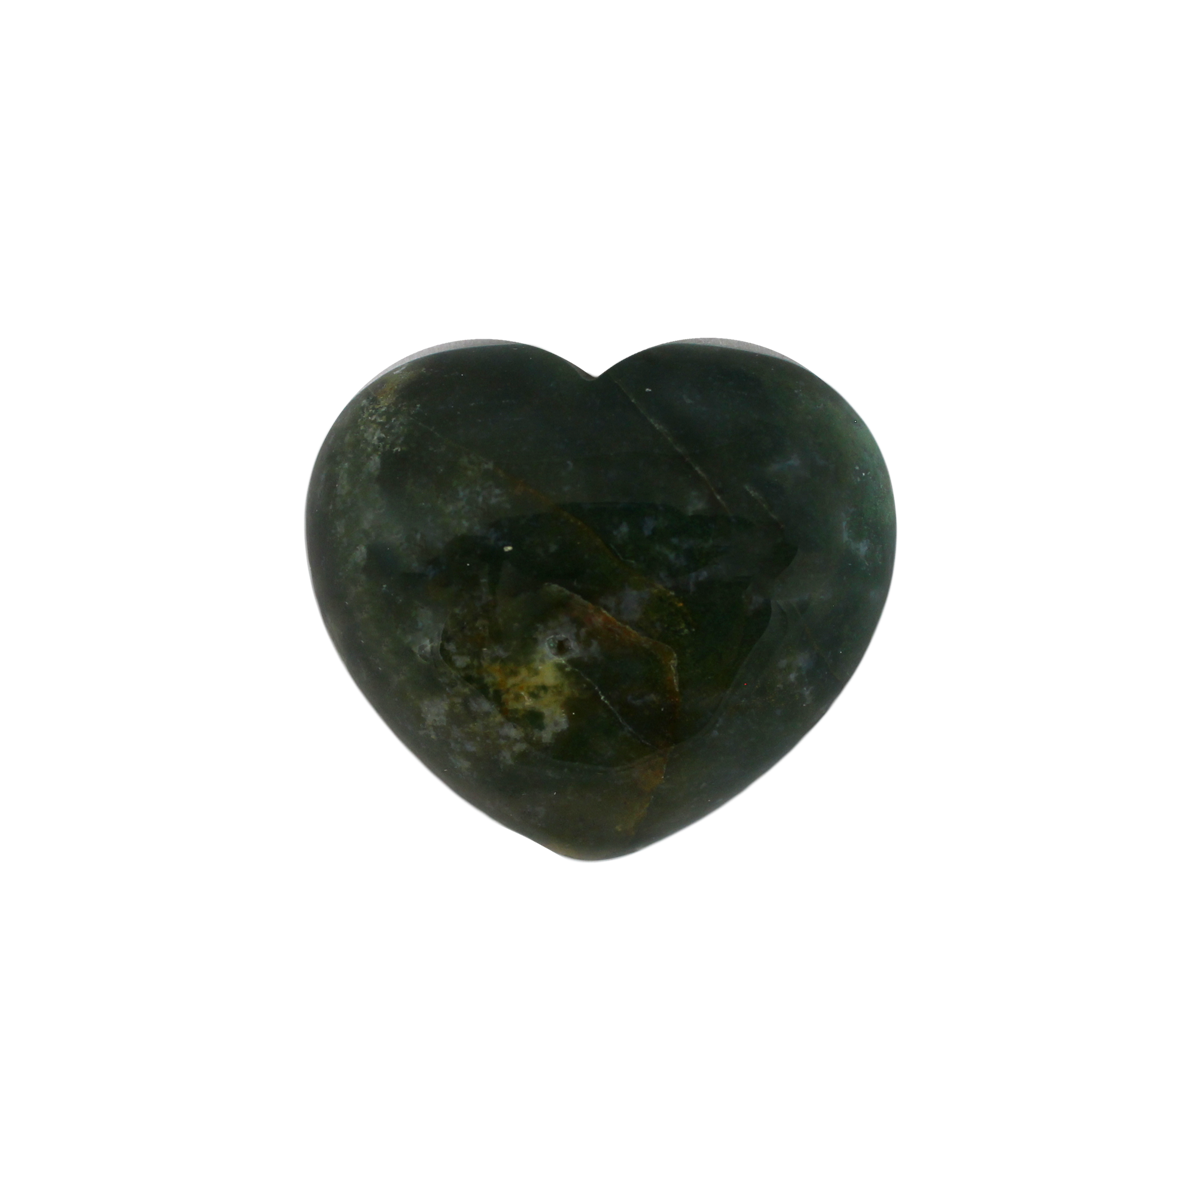 Small heart-shaped Moss Agate